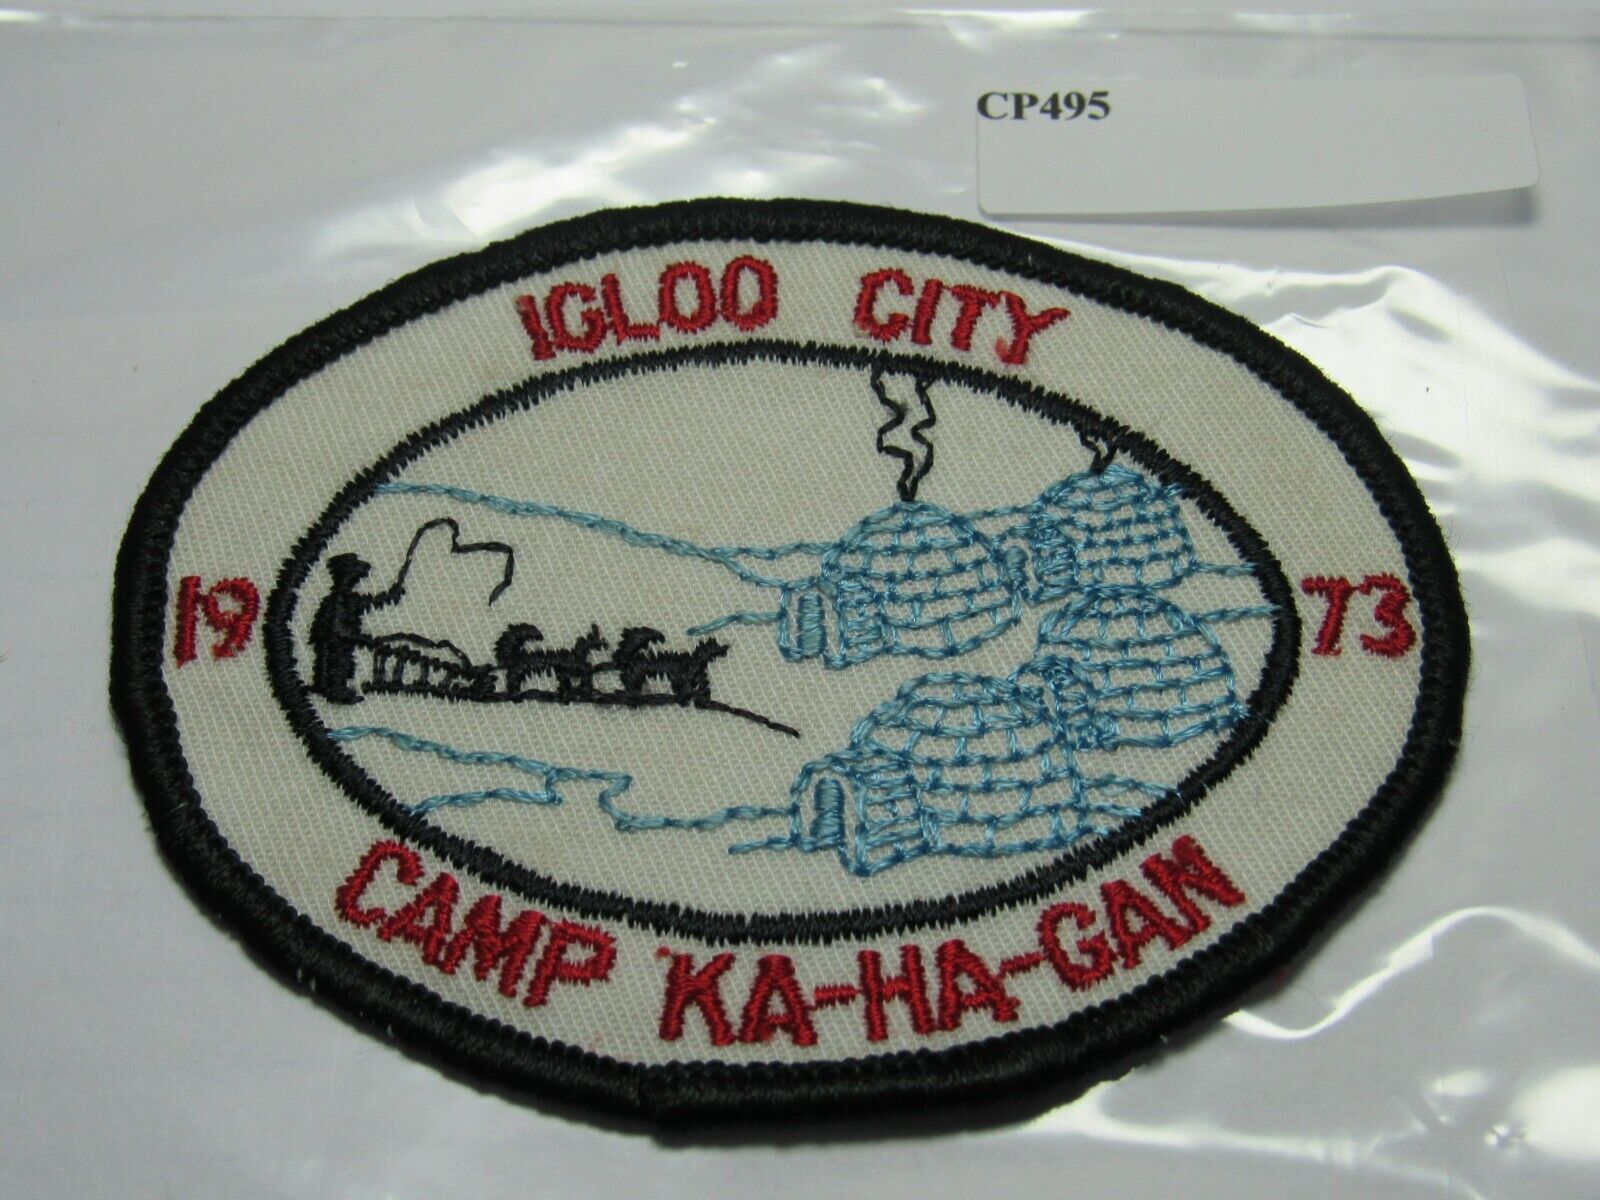 CAMP KA-HA-GAN 1973 IGLOO CITY CP495